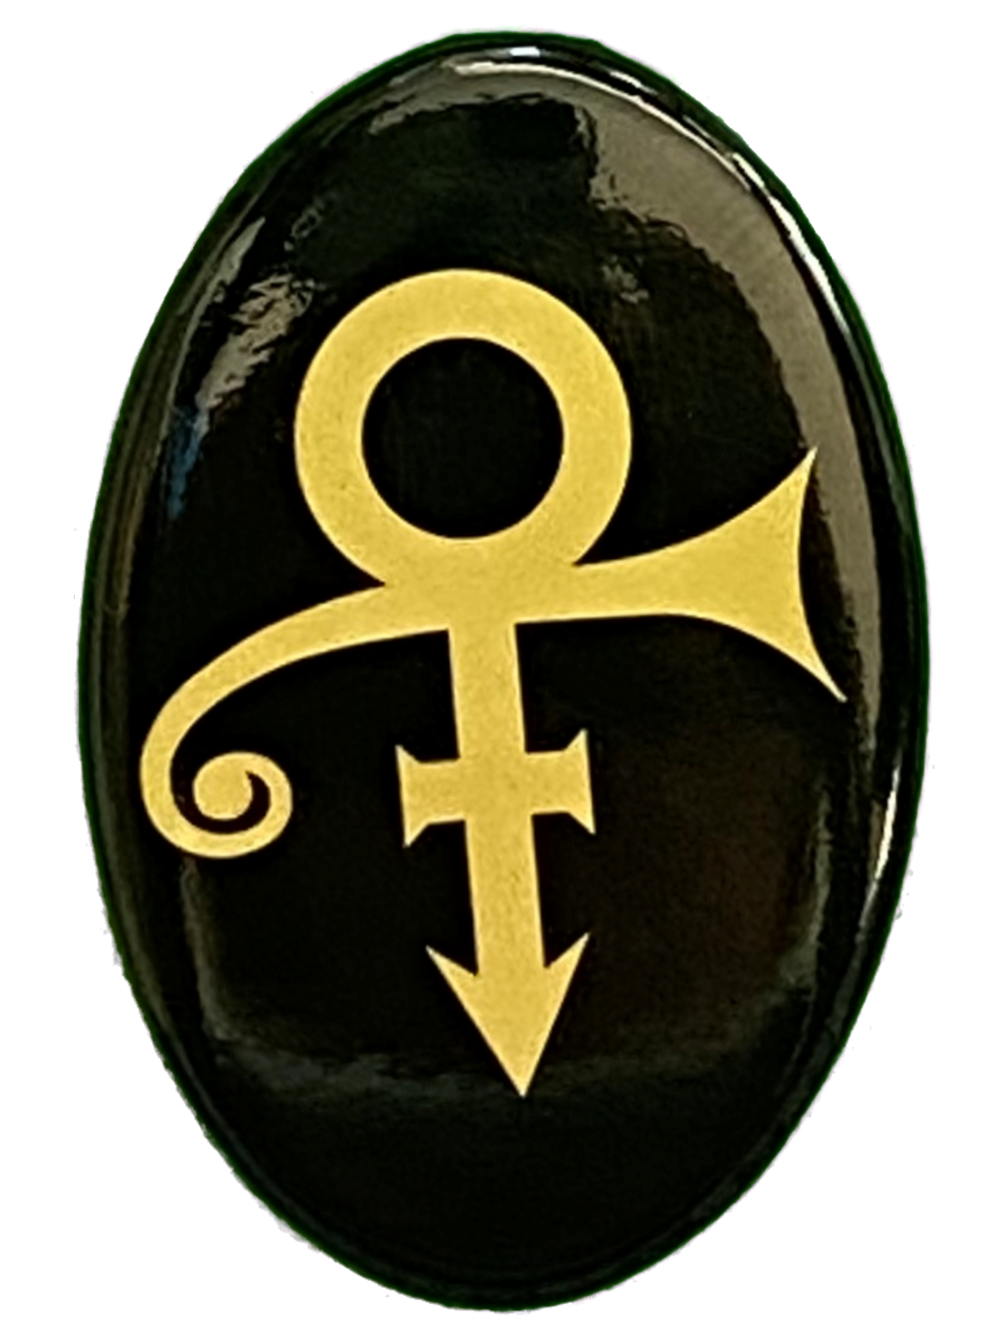 Prince – Paisley Park Official Merchandise Fridge Magnet Oval Love Symbol NEW